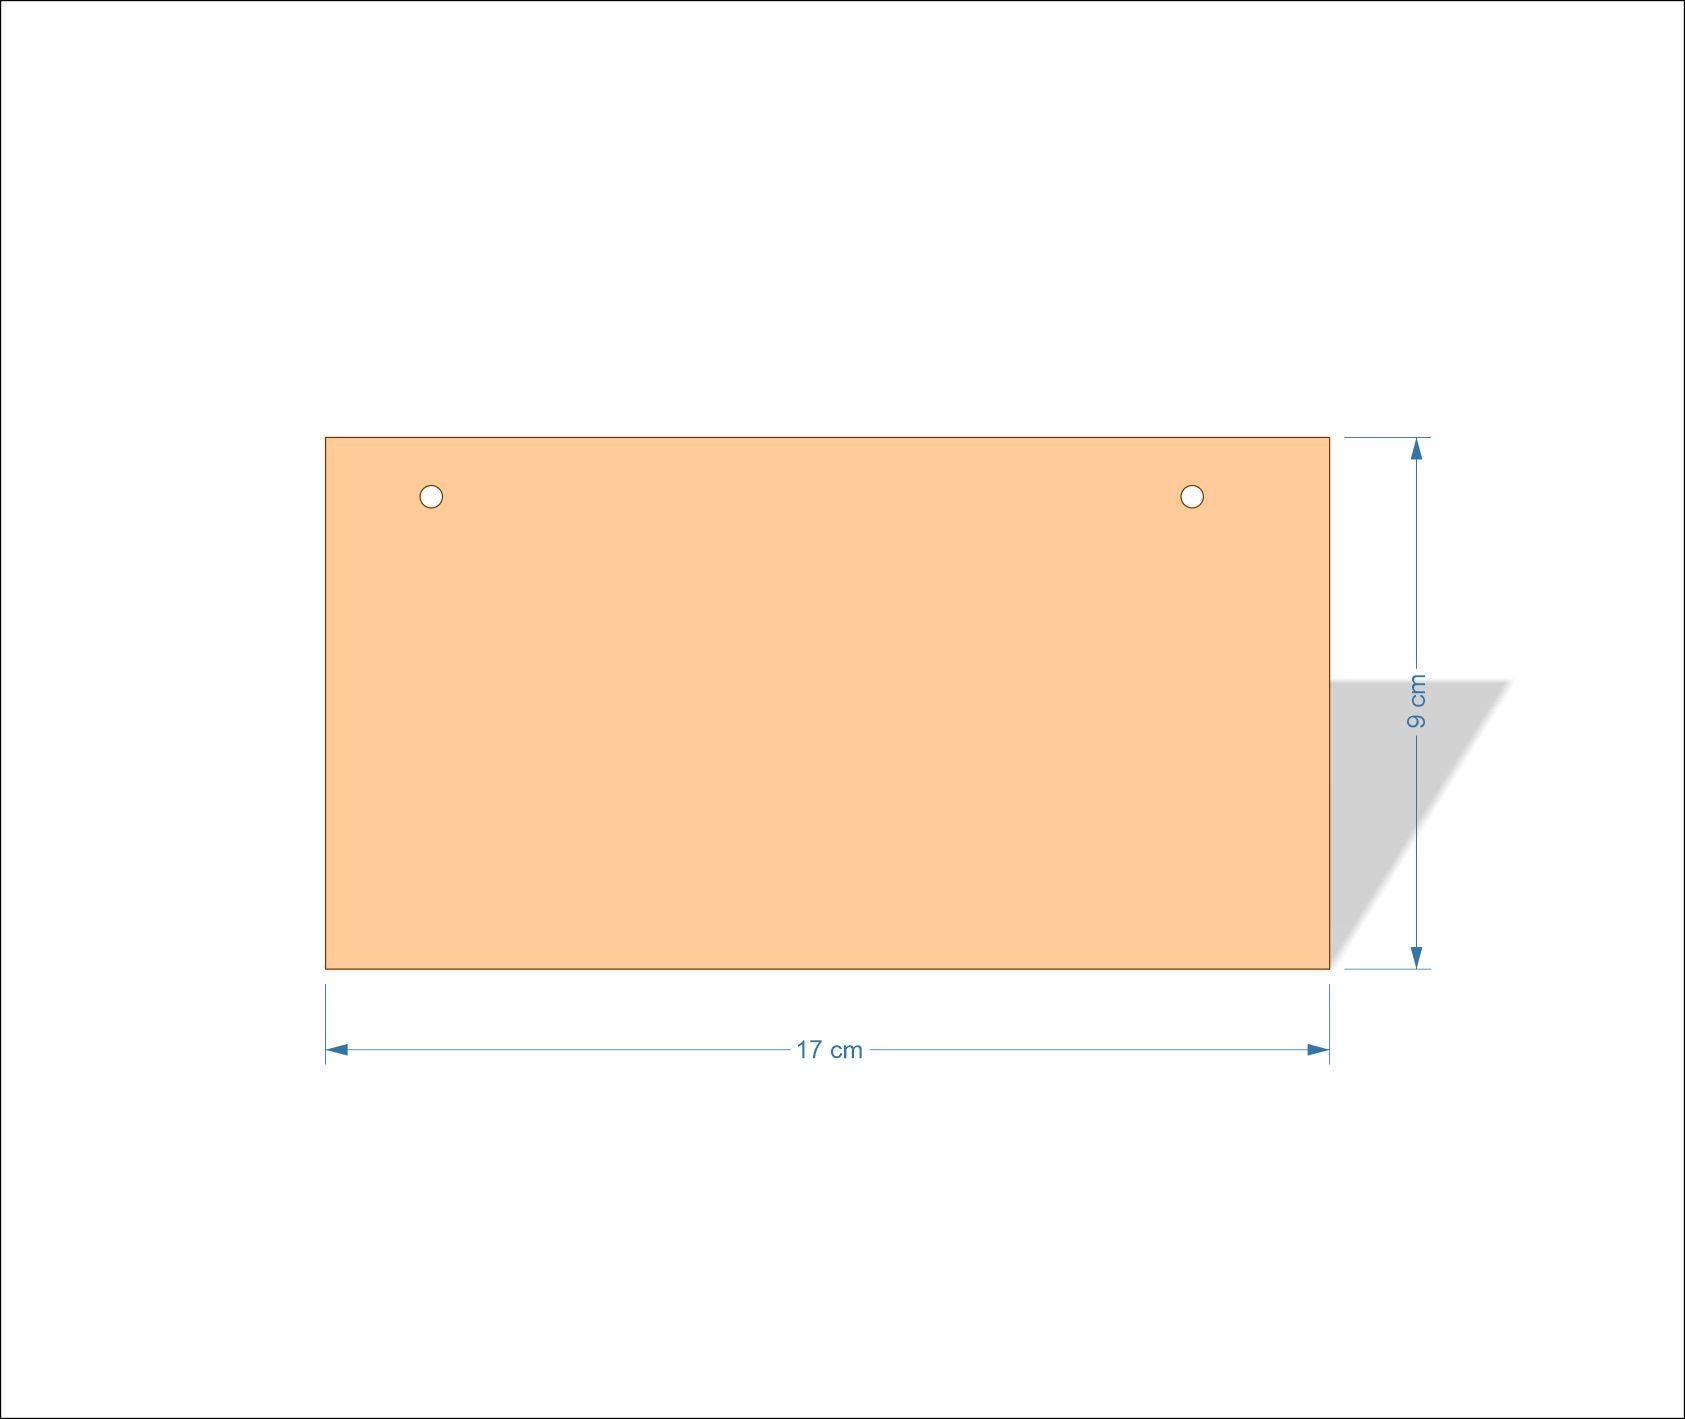 17 cm X 9 cm 3mm MDF Plaques with square corners